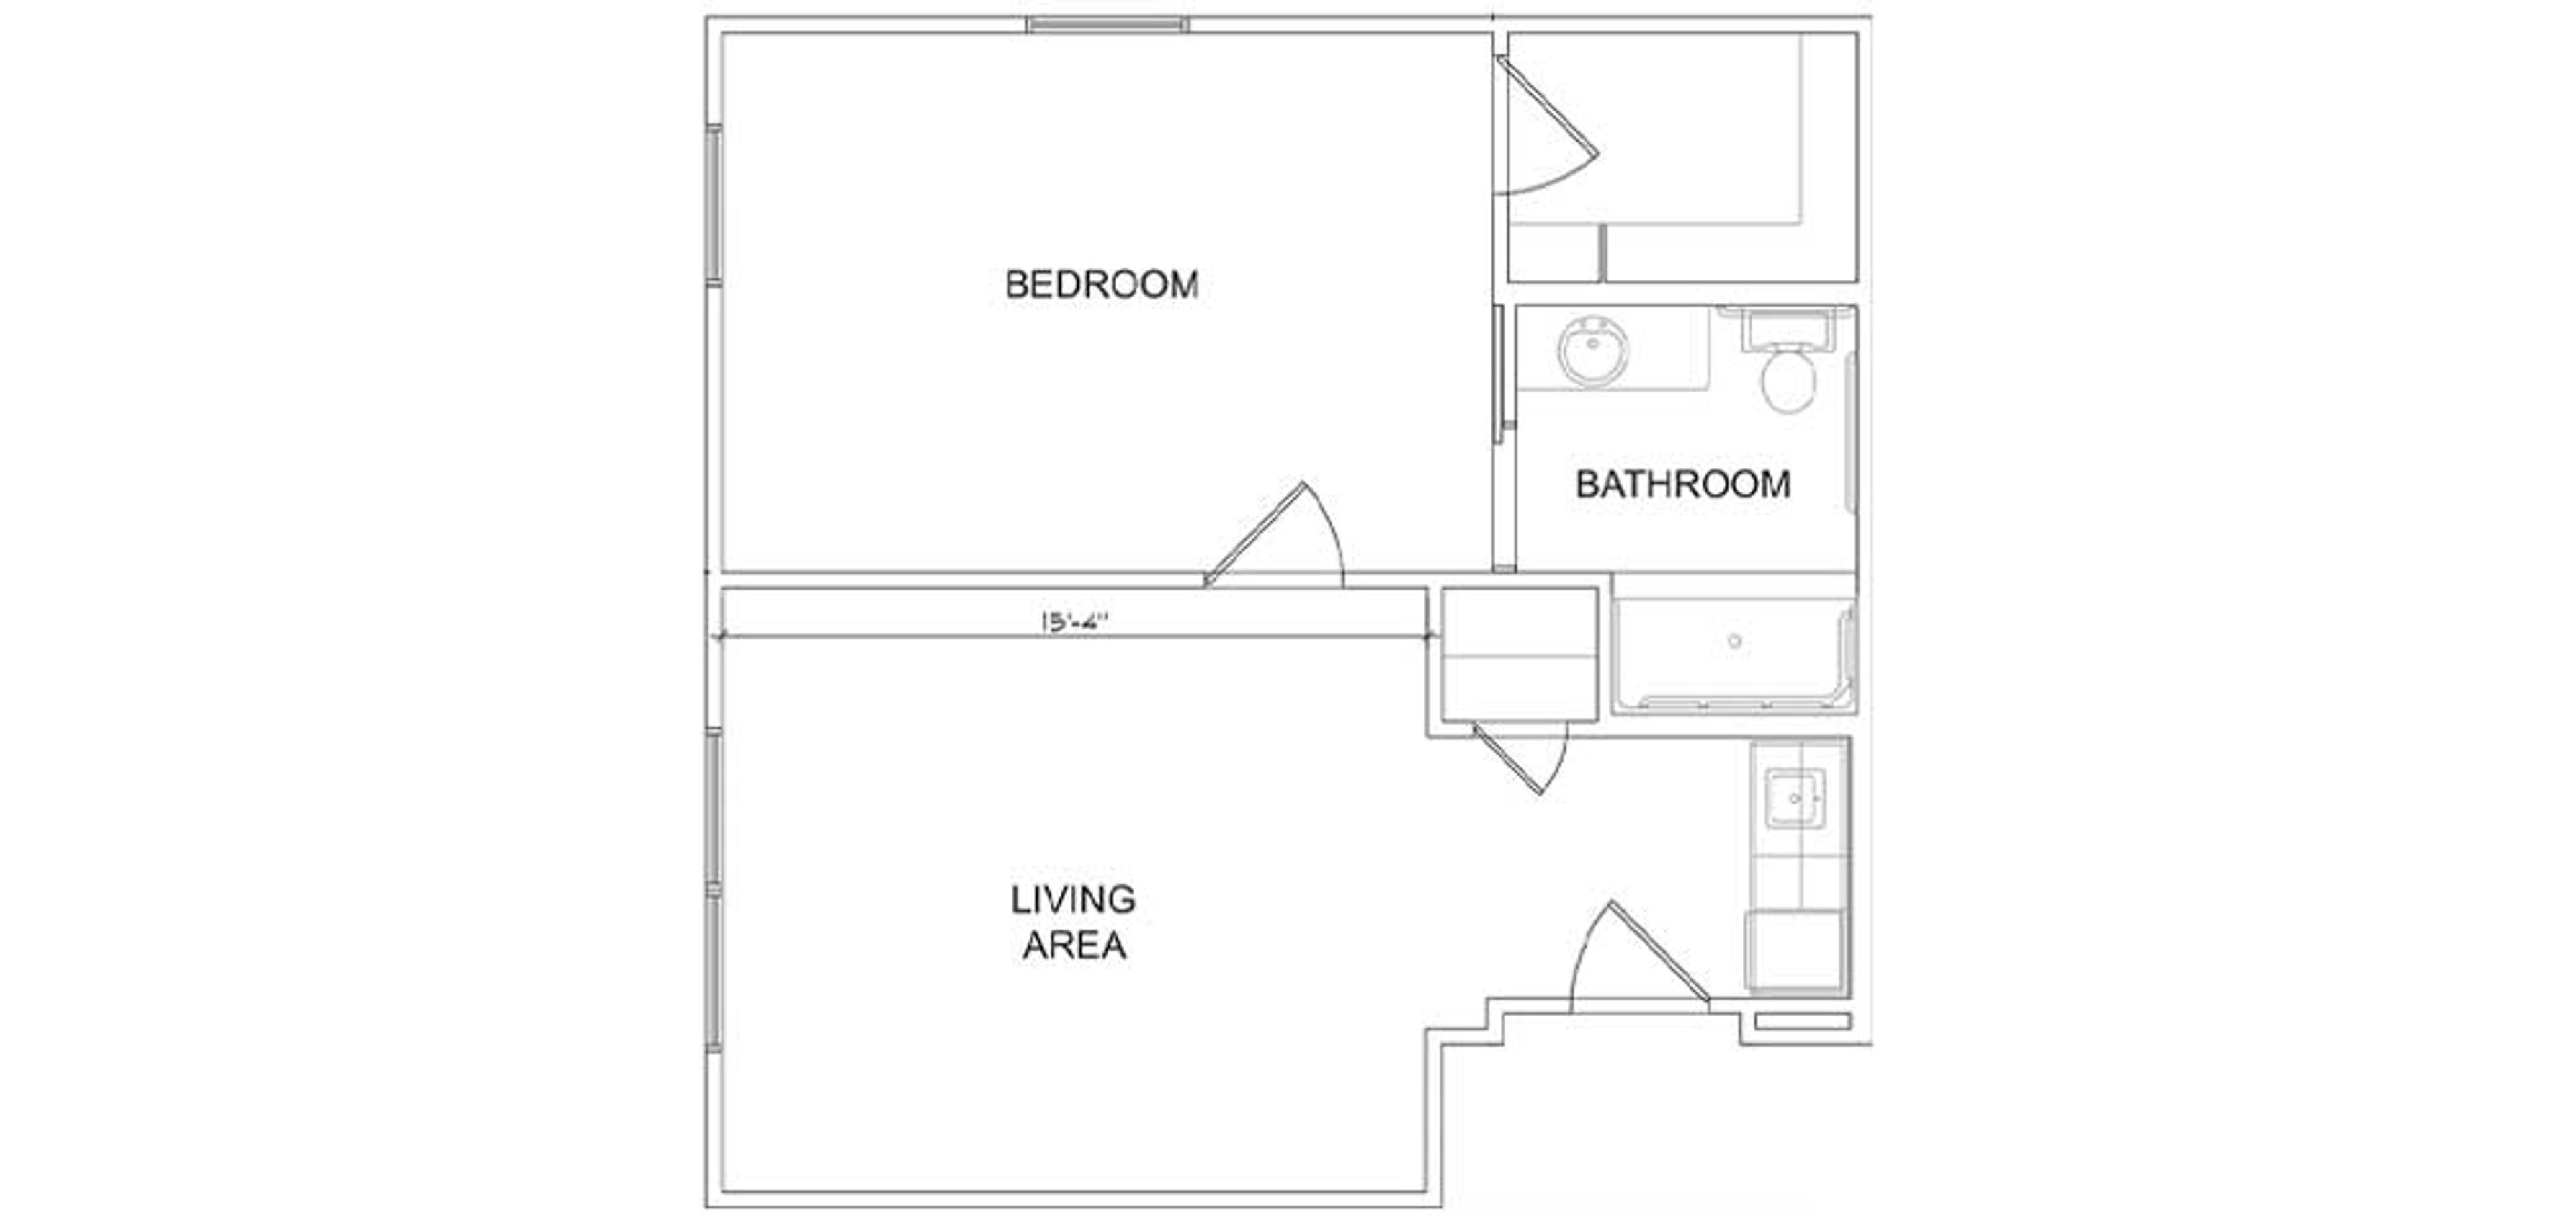 Floorplan - Pecan Pointe - 1 bed, 1 bath, Luxury Assisted Living 